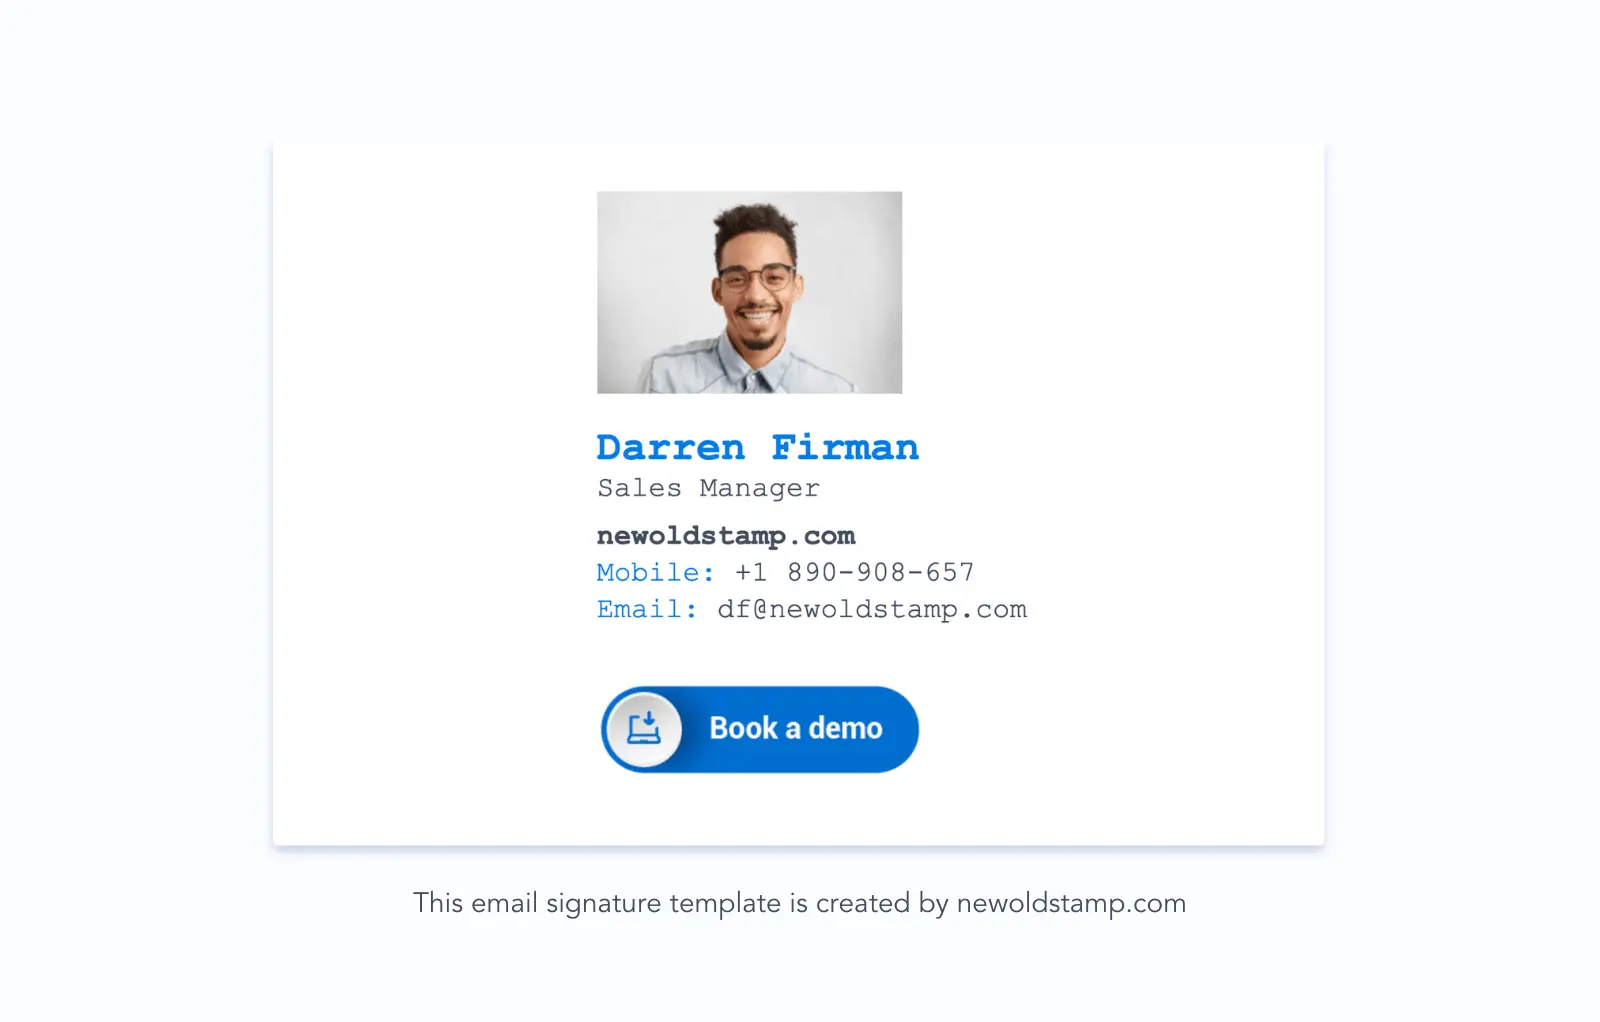 email signature marketing. book a demo button